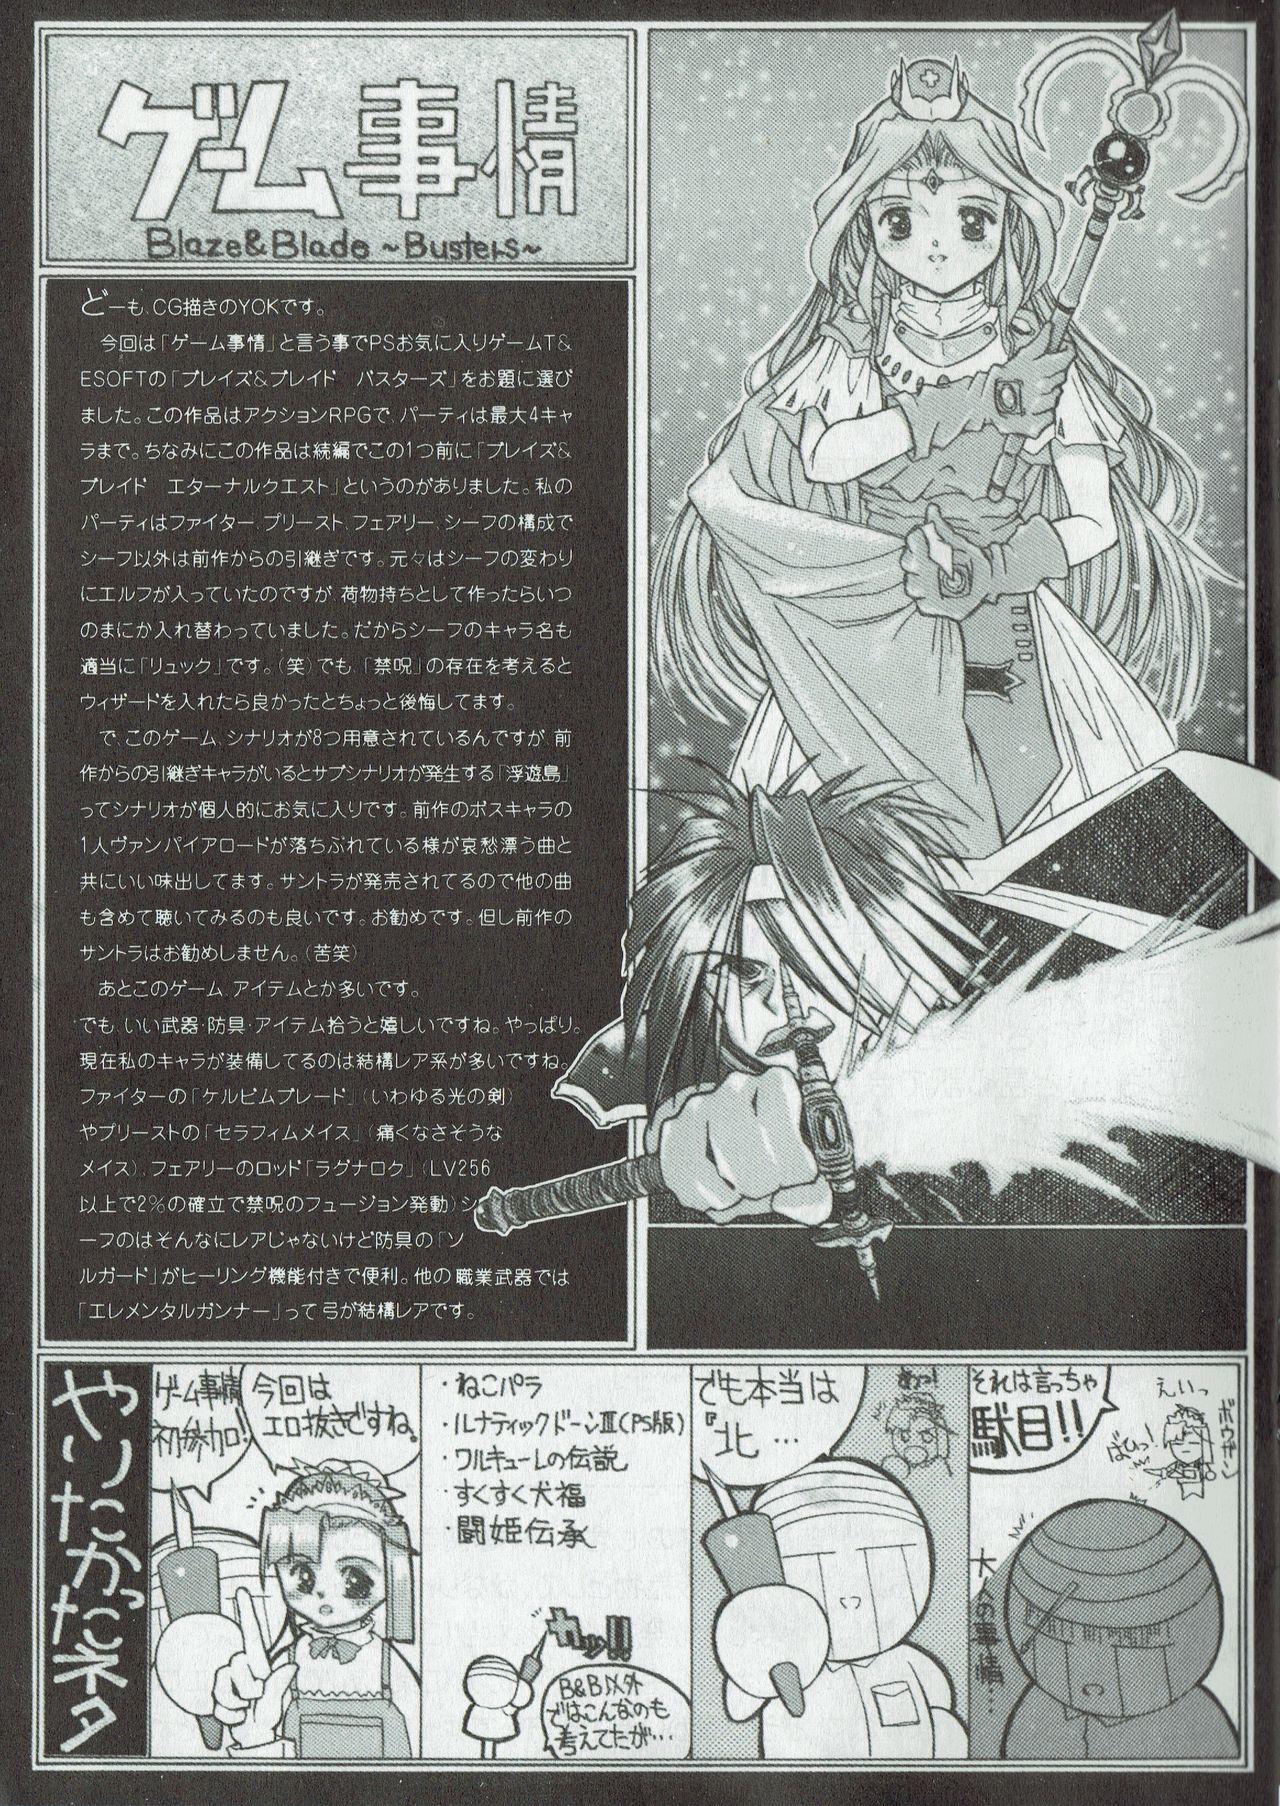 Magrinha Arisu no Denchi Bakudan Vol. 09 Brother - Page 8